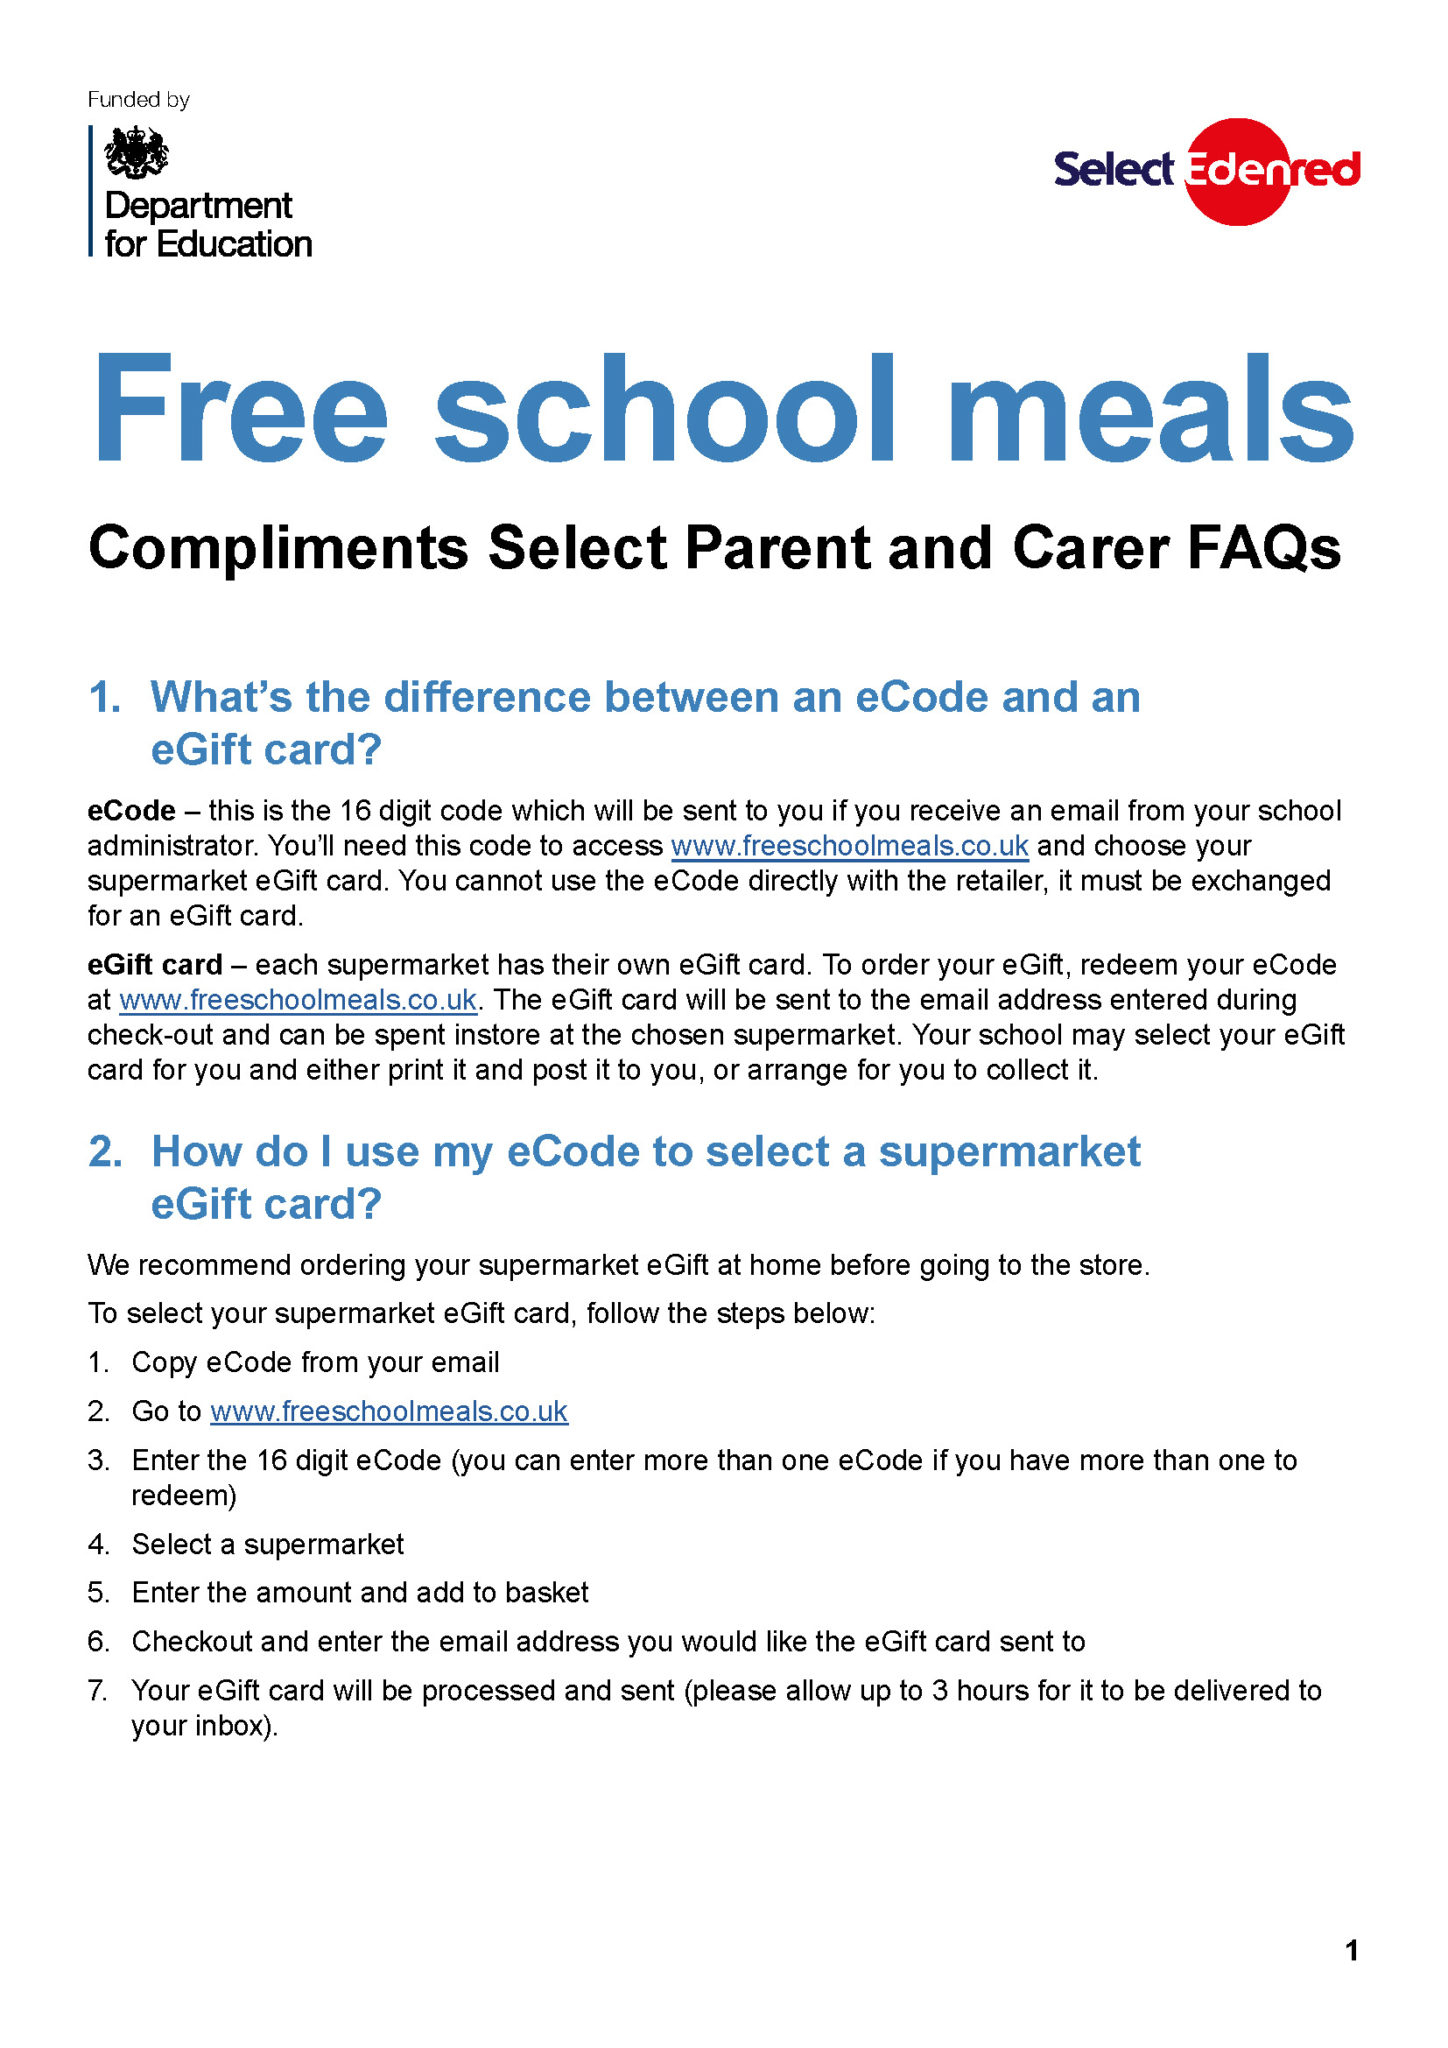 Free School Meals - National Voucher Scheme - 2Nd April 2020